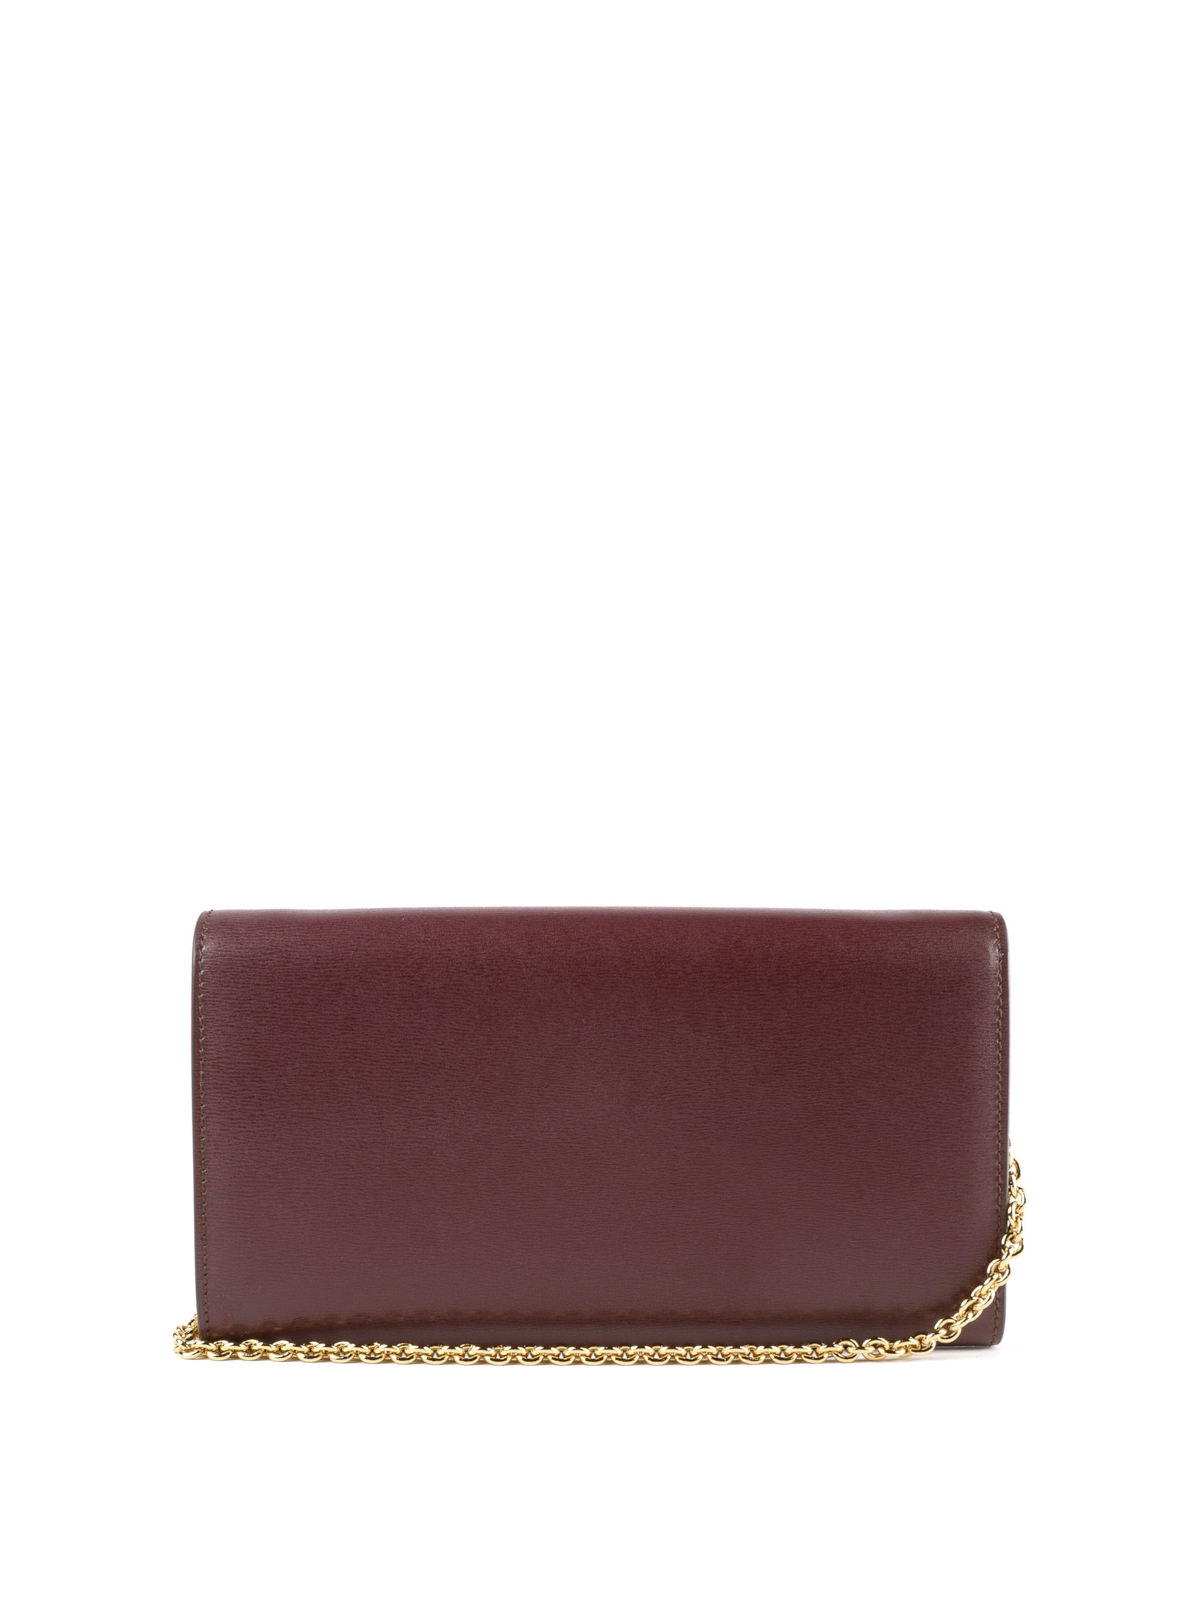 Clutches Salvatore Ferragamo - Gancini burgundy wallet clutch 